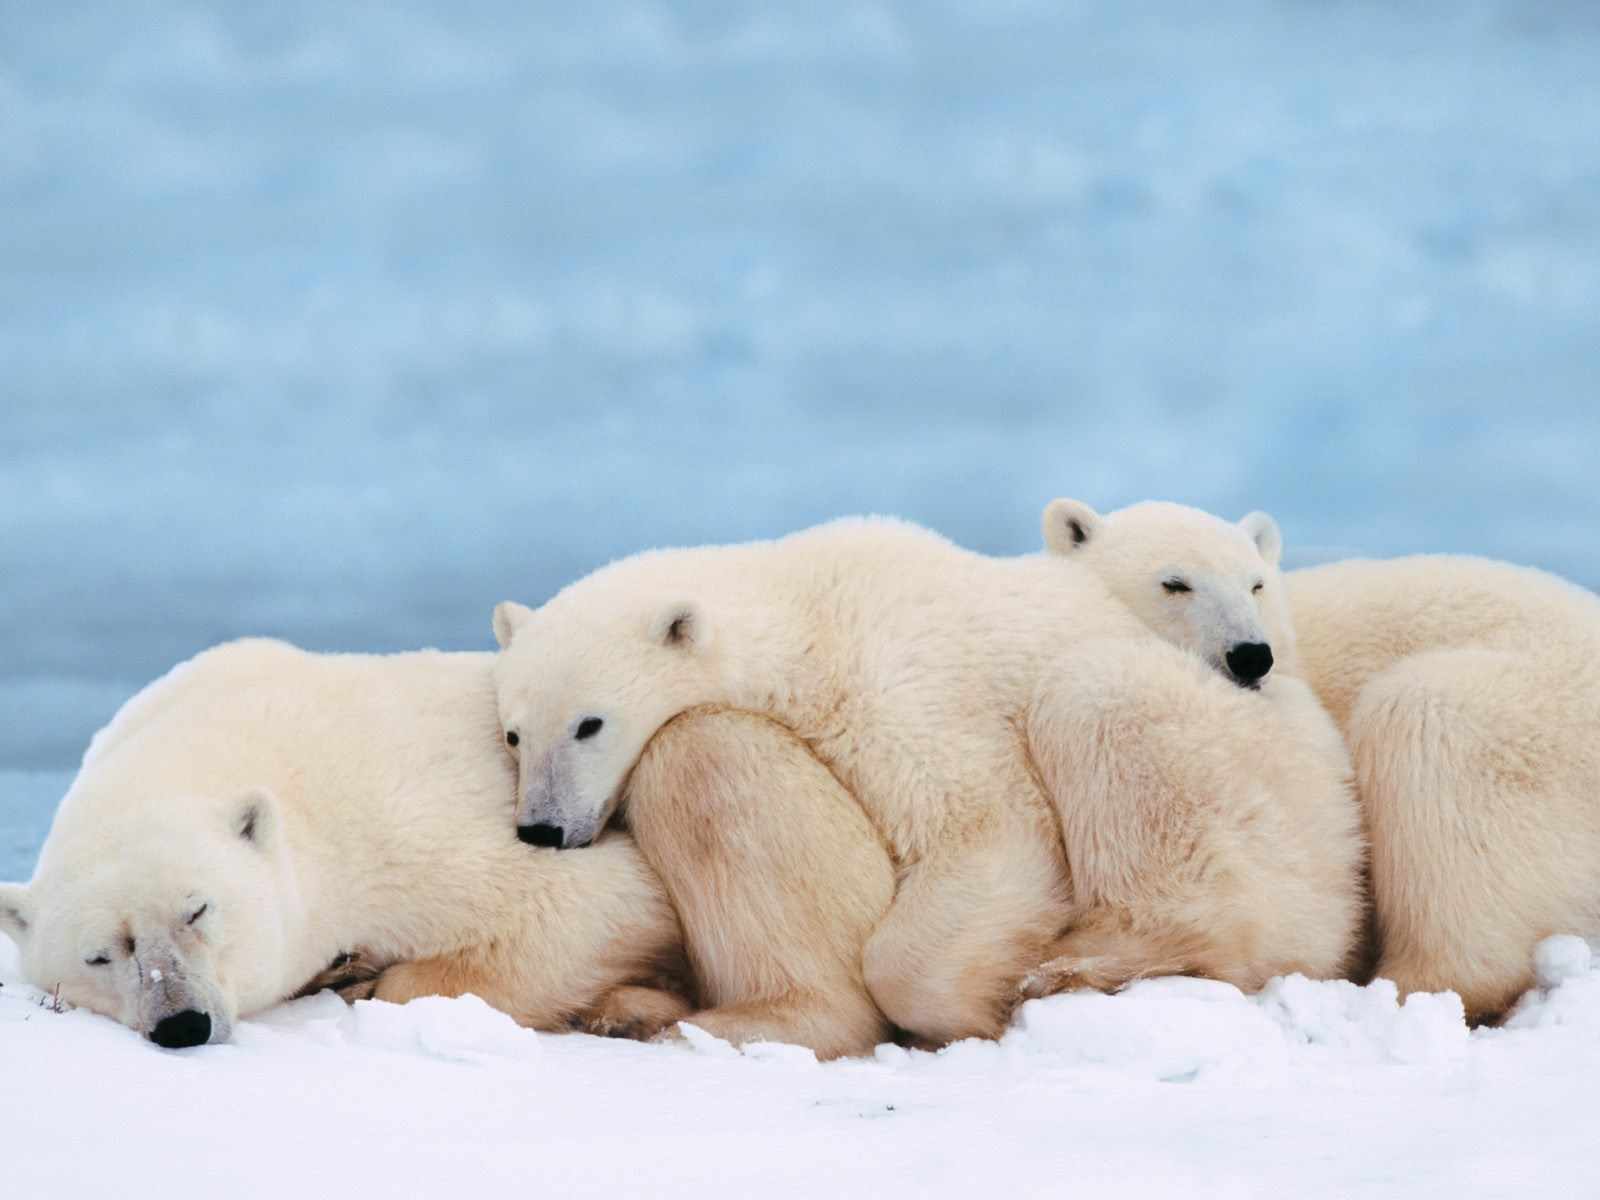 ... DISEÑO Y FOTOGRAFIA: osos,osos polares,wallpapers hd,fondos,bear